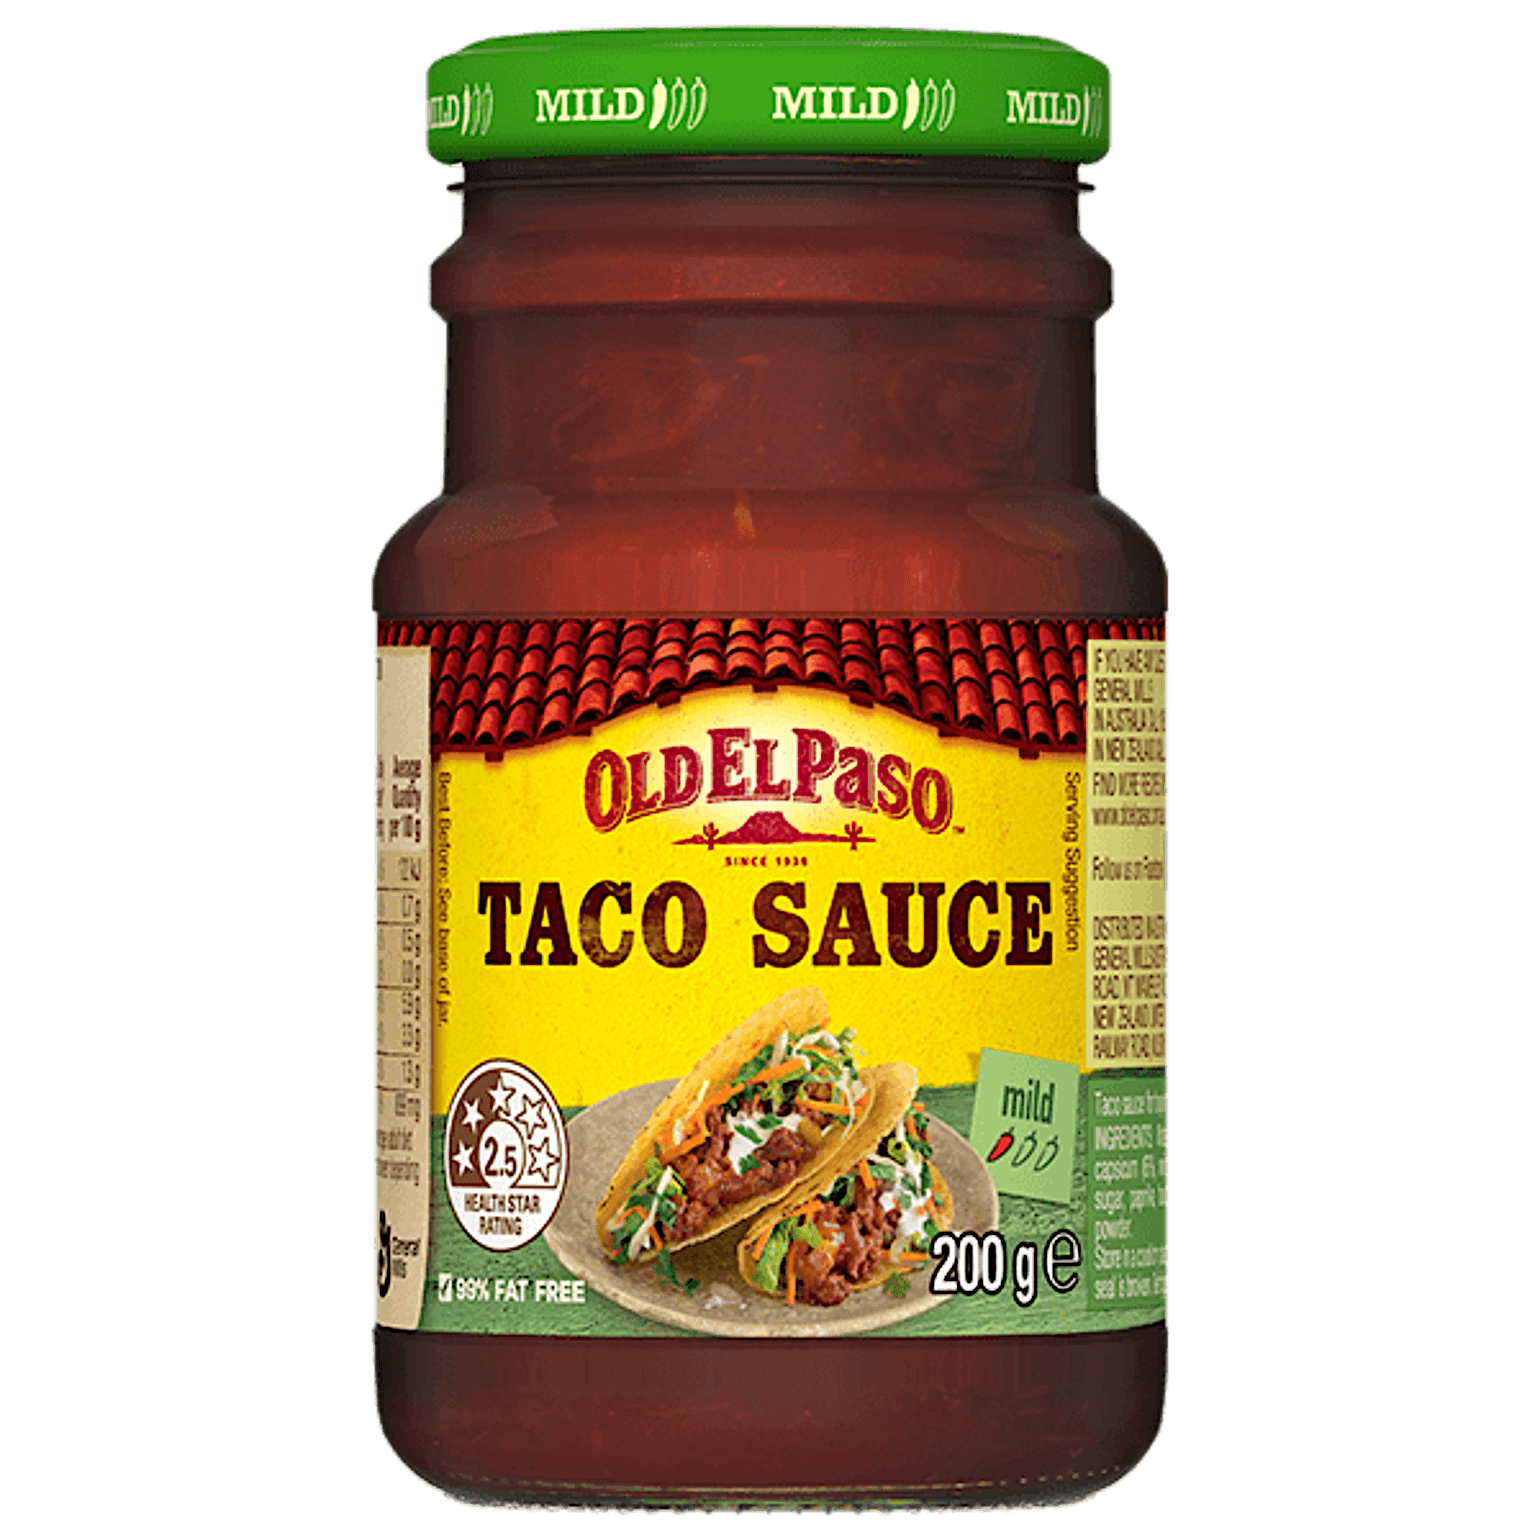 a glass jar of Old El Paso's mild taco sauce (200g)